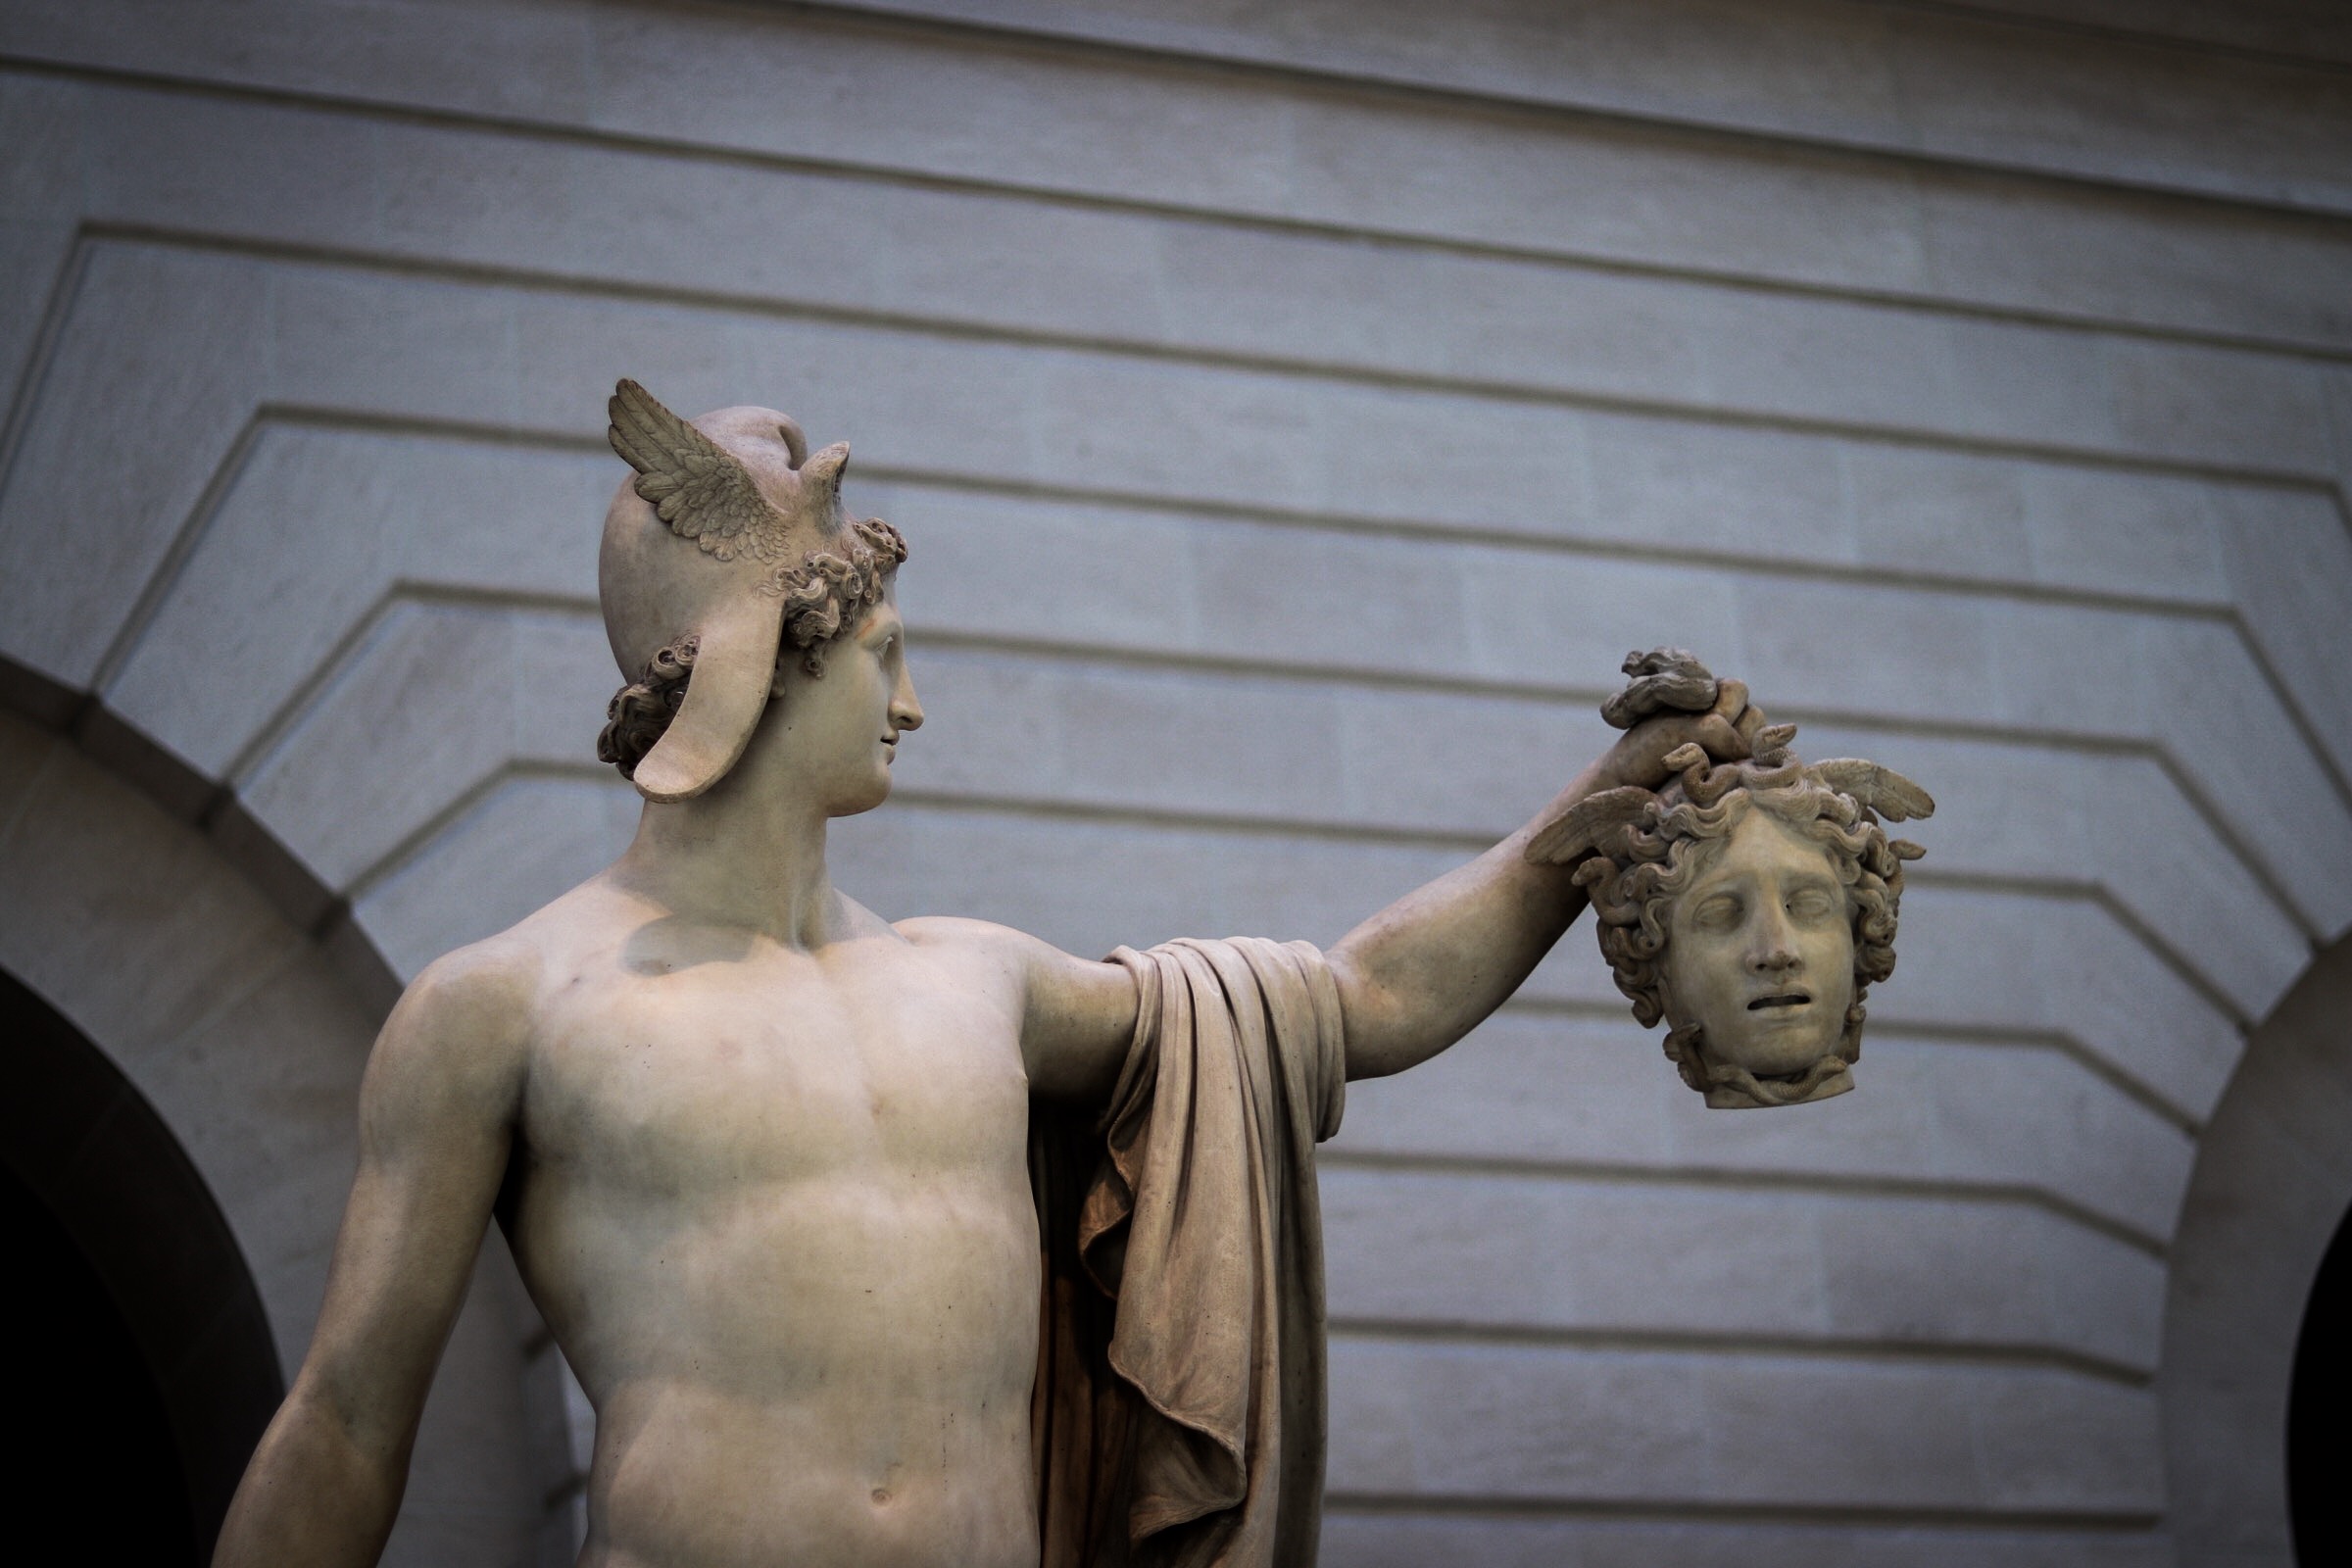 General 2400x1600 museum New York City sculpture portrait Medusa Perseus classic art